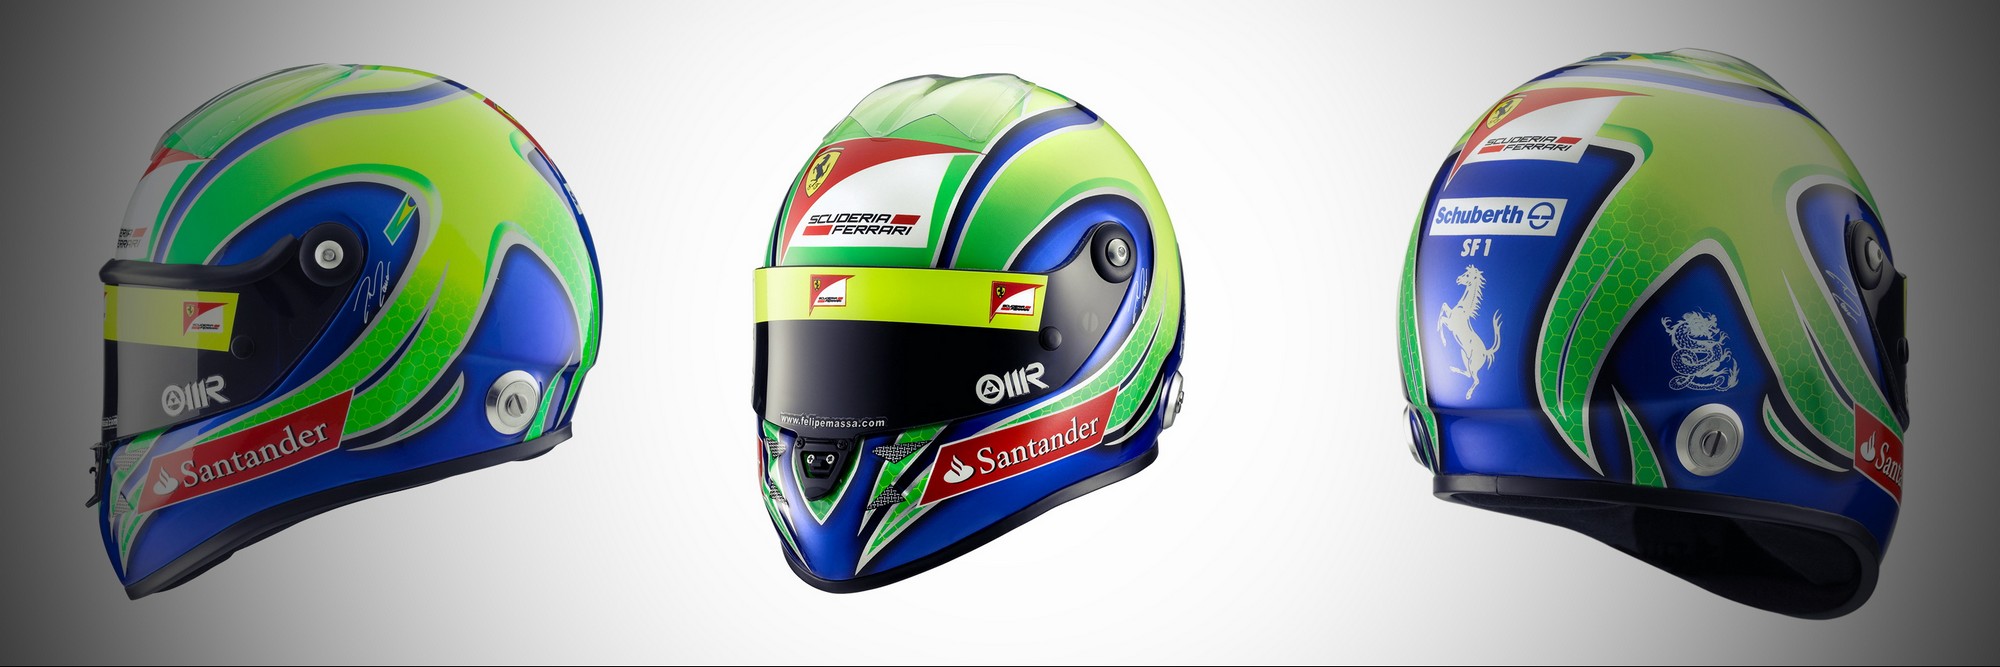 Шлем Фелипе Массы на сезон 2012 года | 2012 helmet of Felipe Massa